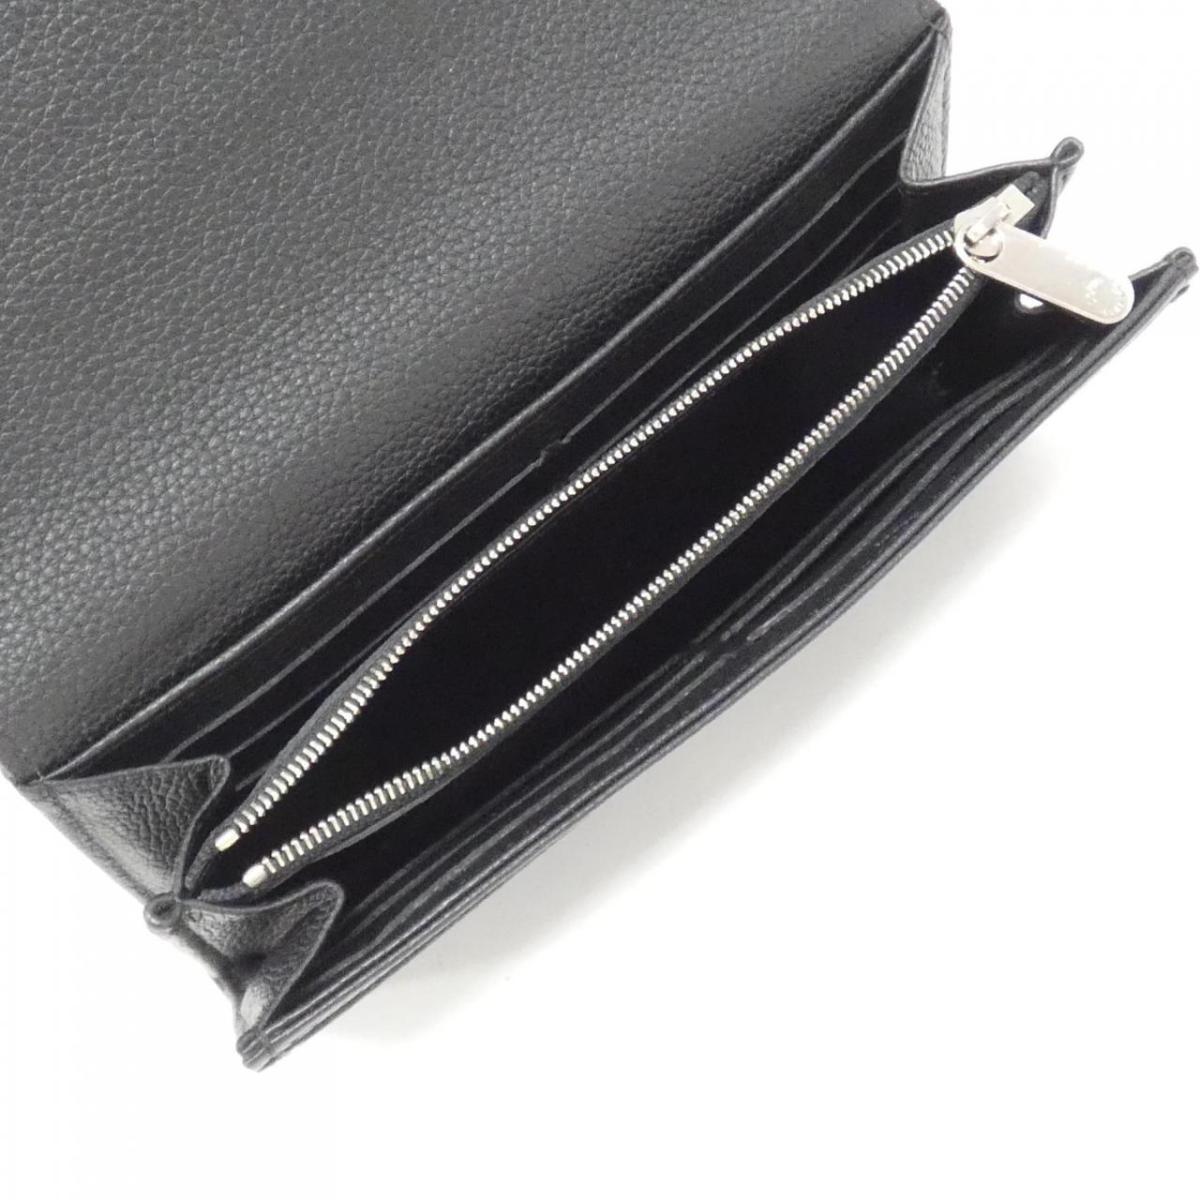 Louis Vuitton Machina Portefolio M60143 Wallet